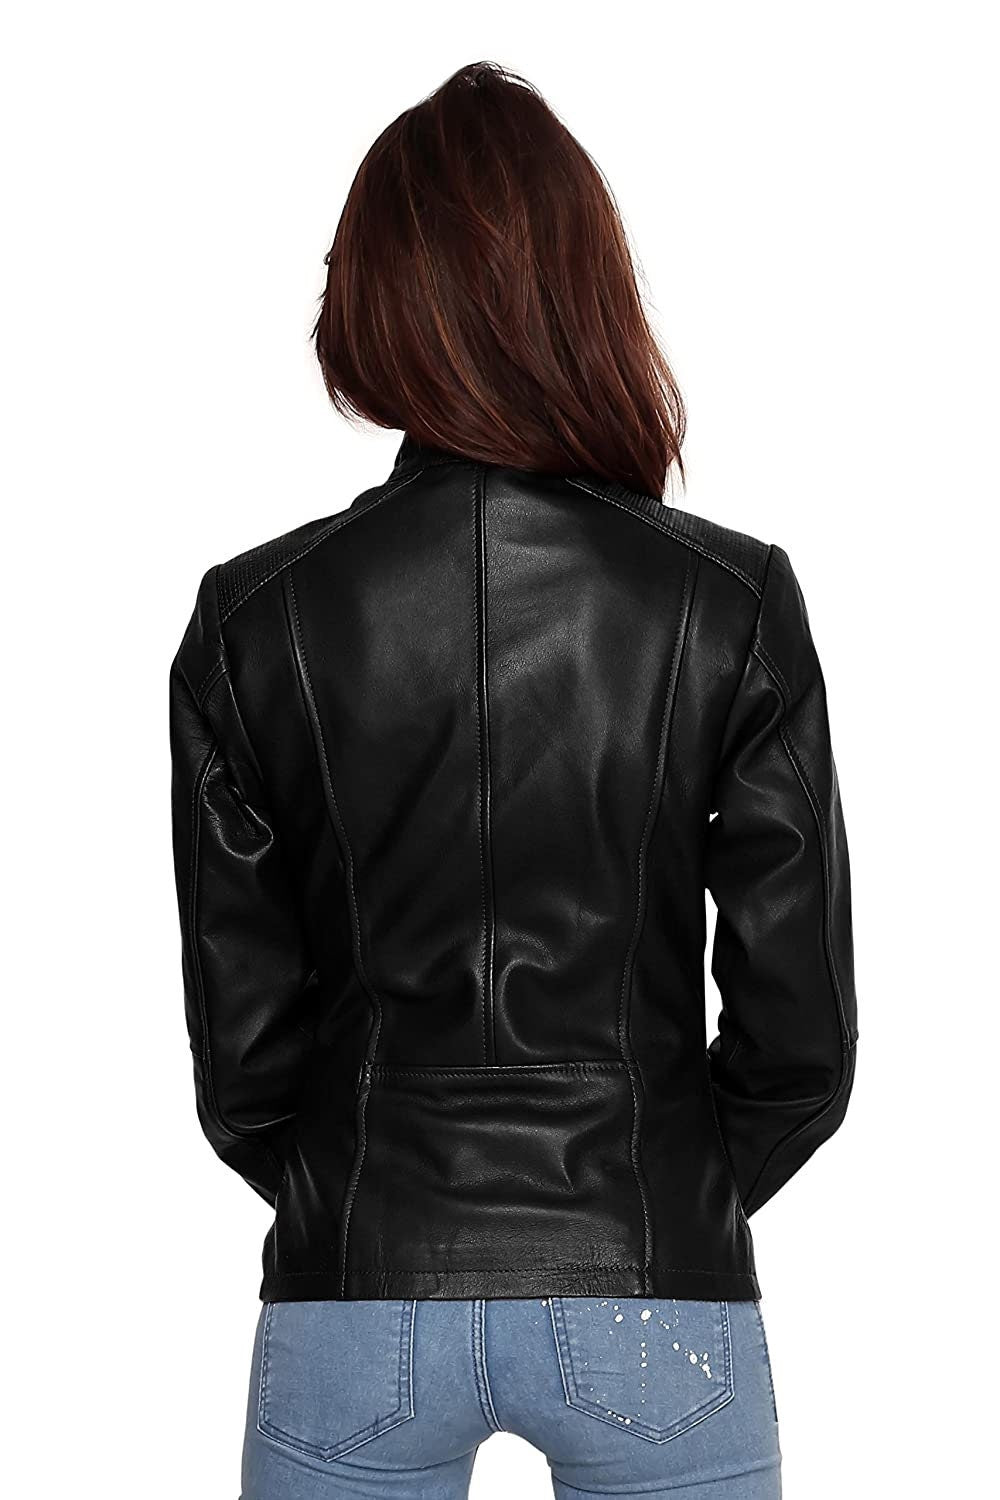 Genuine Leather Ghost Rider Jacket | Steampunk Leather Jacket